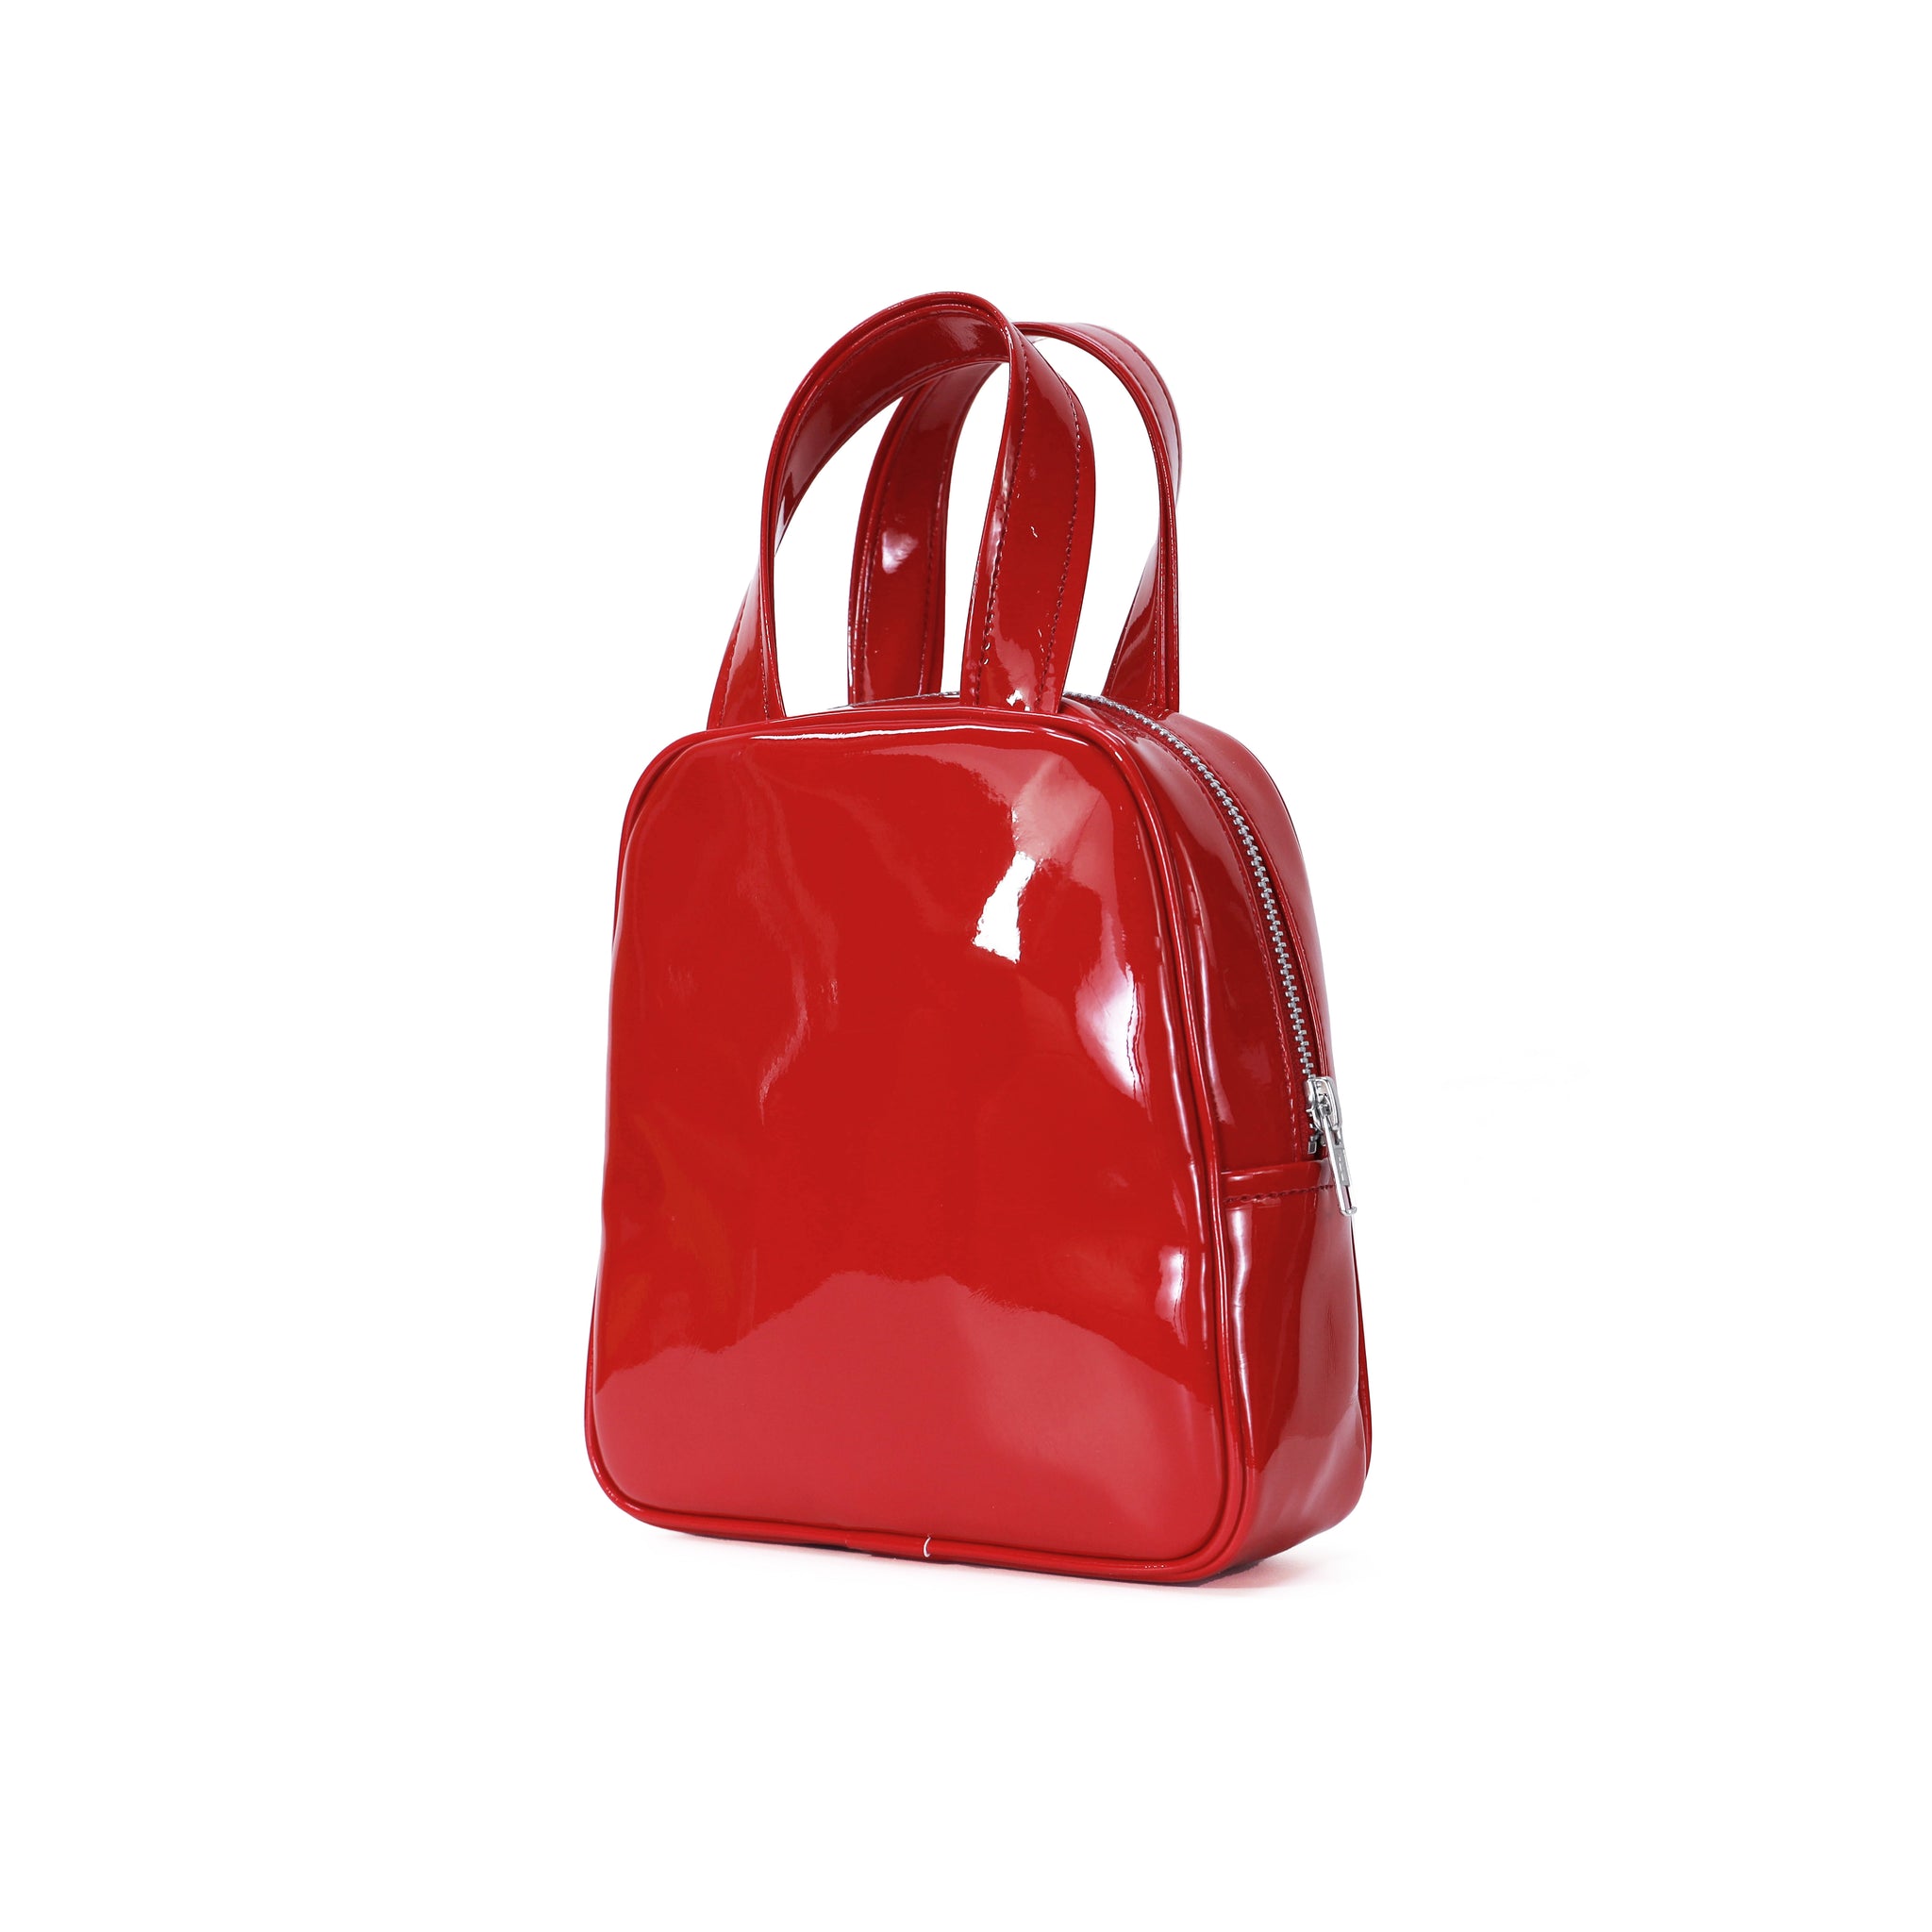 Patent Heart Polka-Dot Red Bag